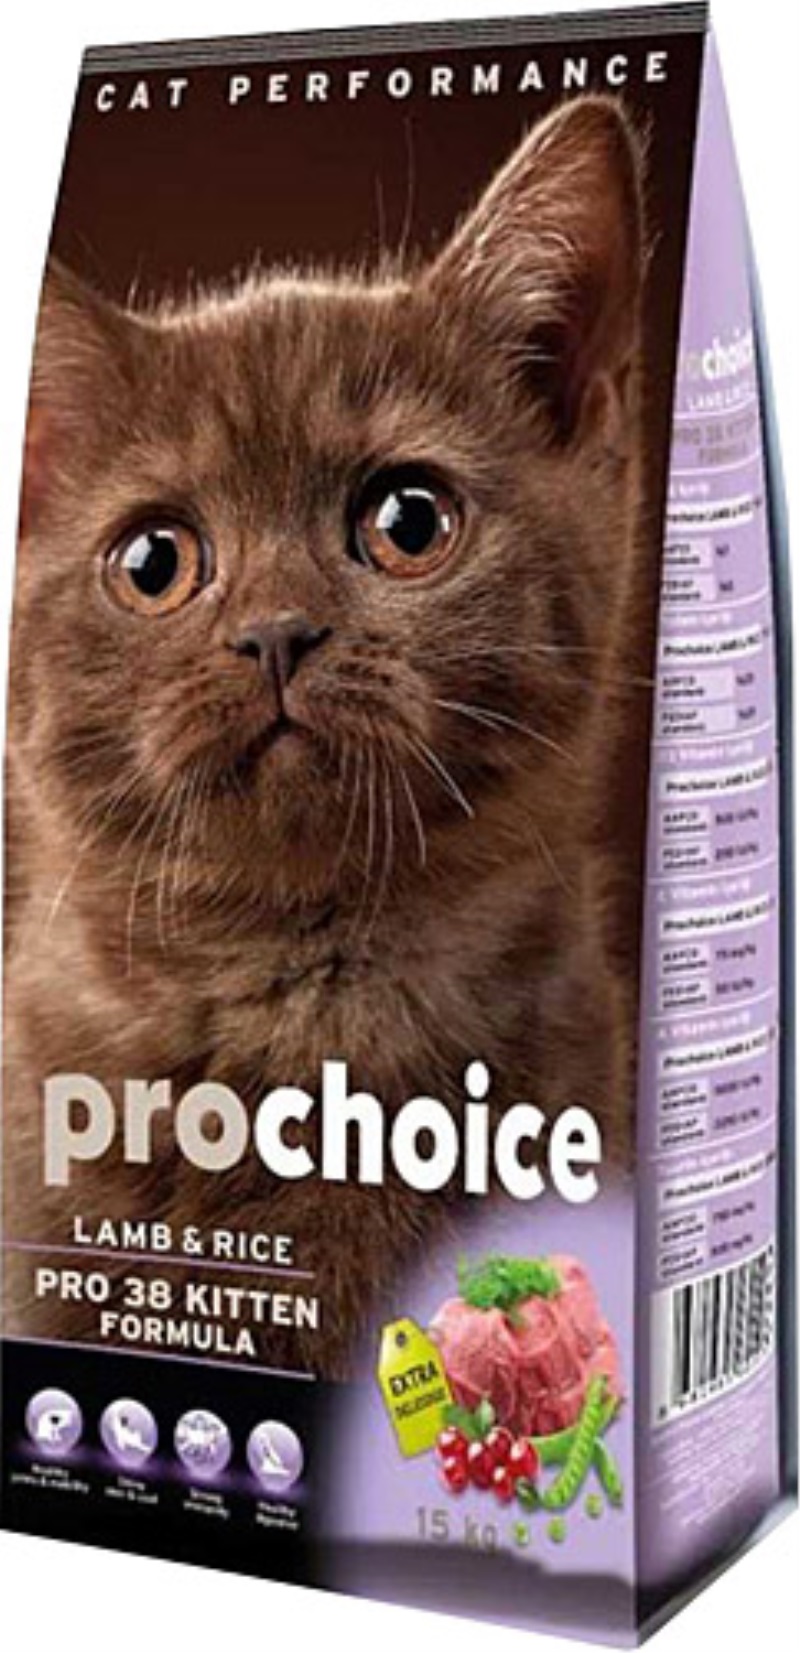  Prochoice Pro 38 Baby Kitten Kuzulu Yavru Kedi Maması 15 Kg